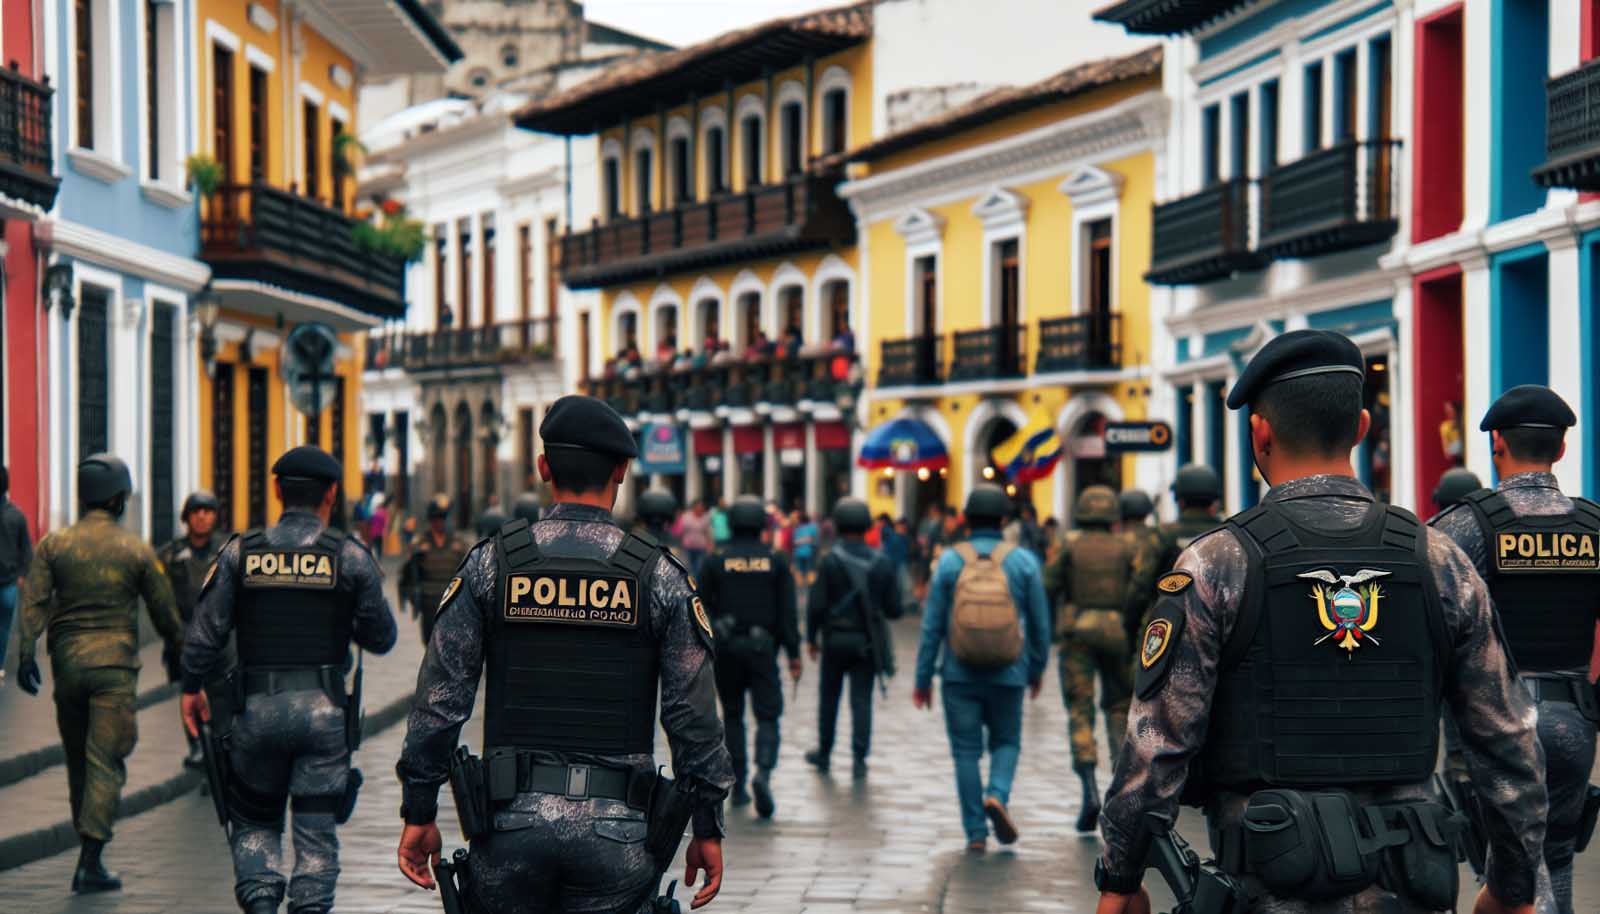 is ecuador safe to visit police presence